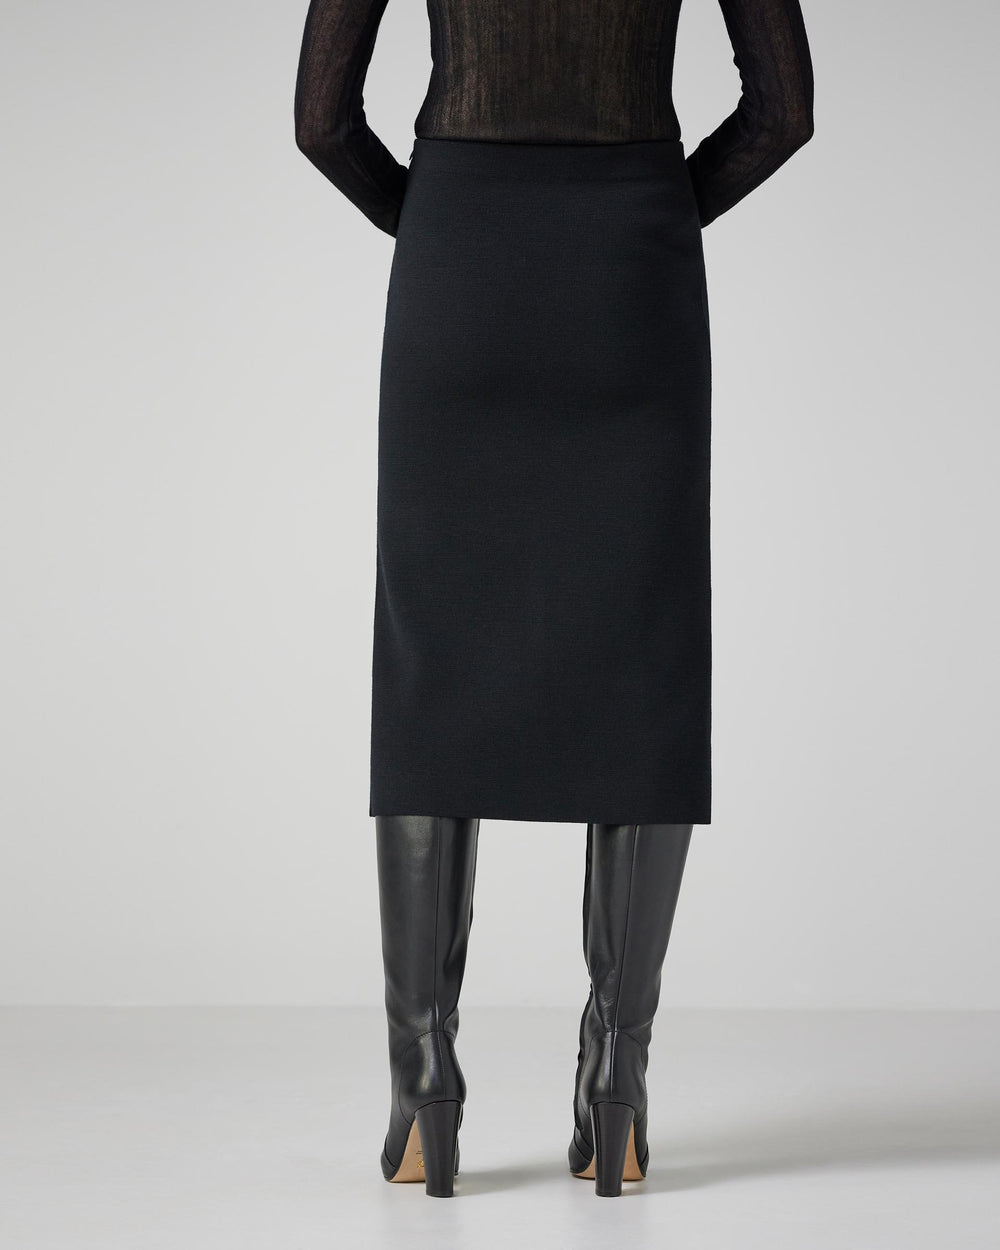 Daphne Skirt in Merino Wool, Black